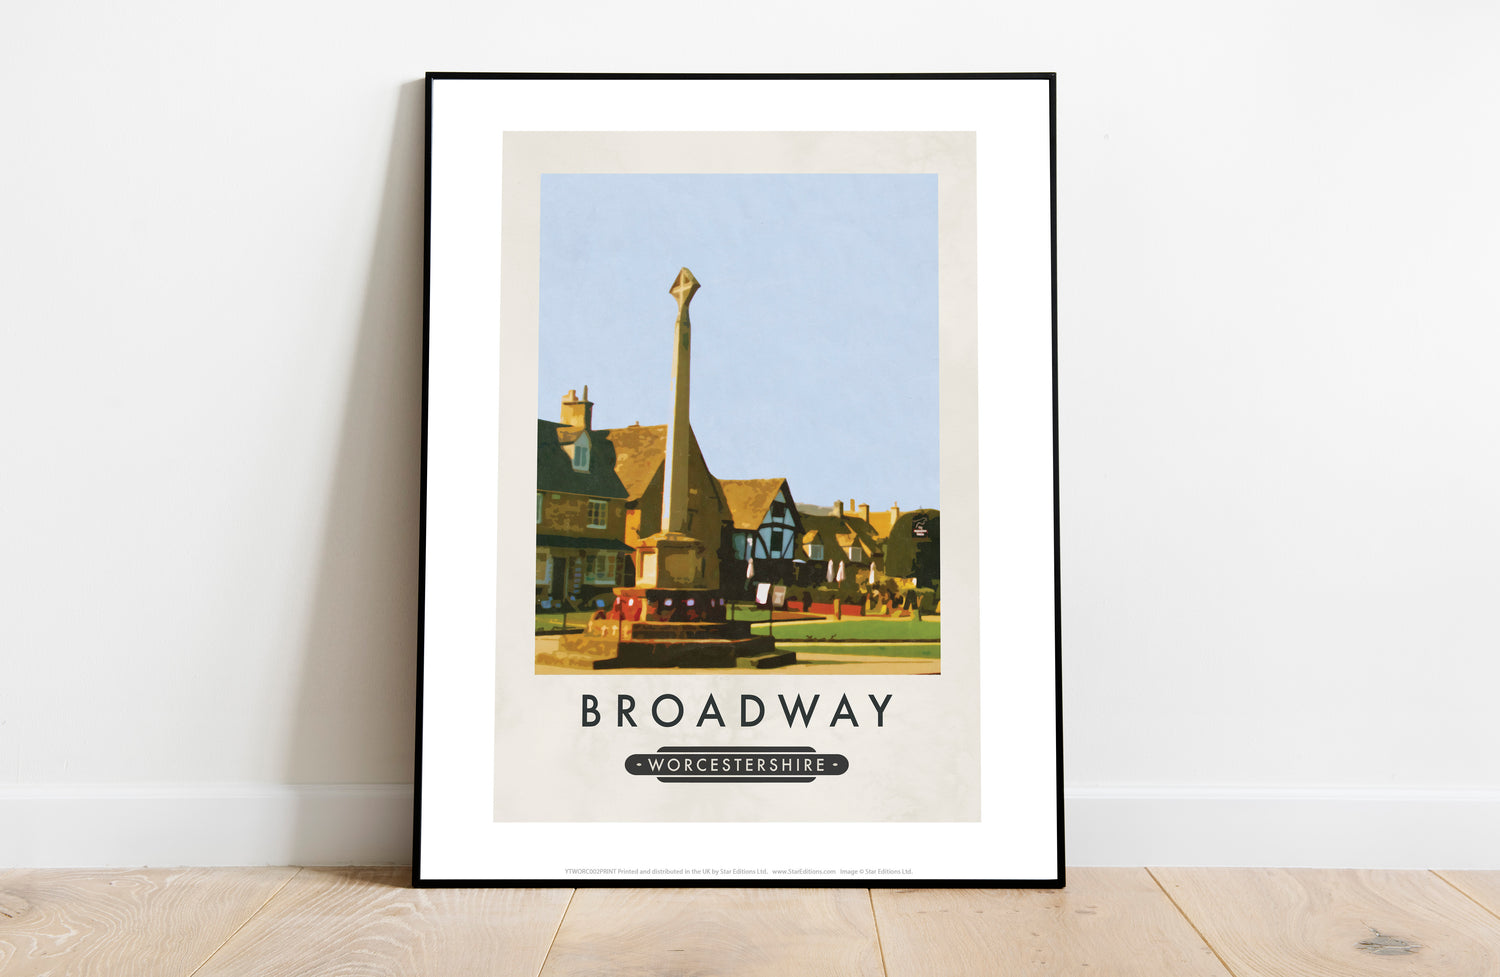 Broadway, Worcestershire - Art Print